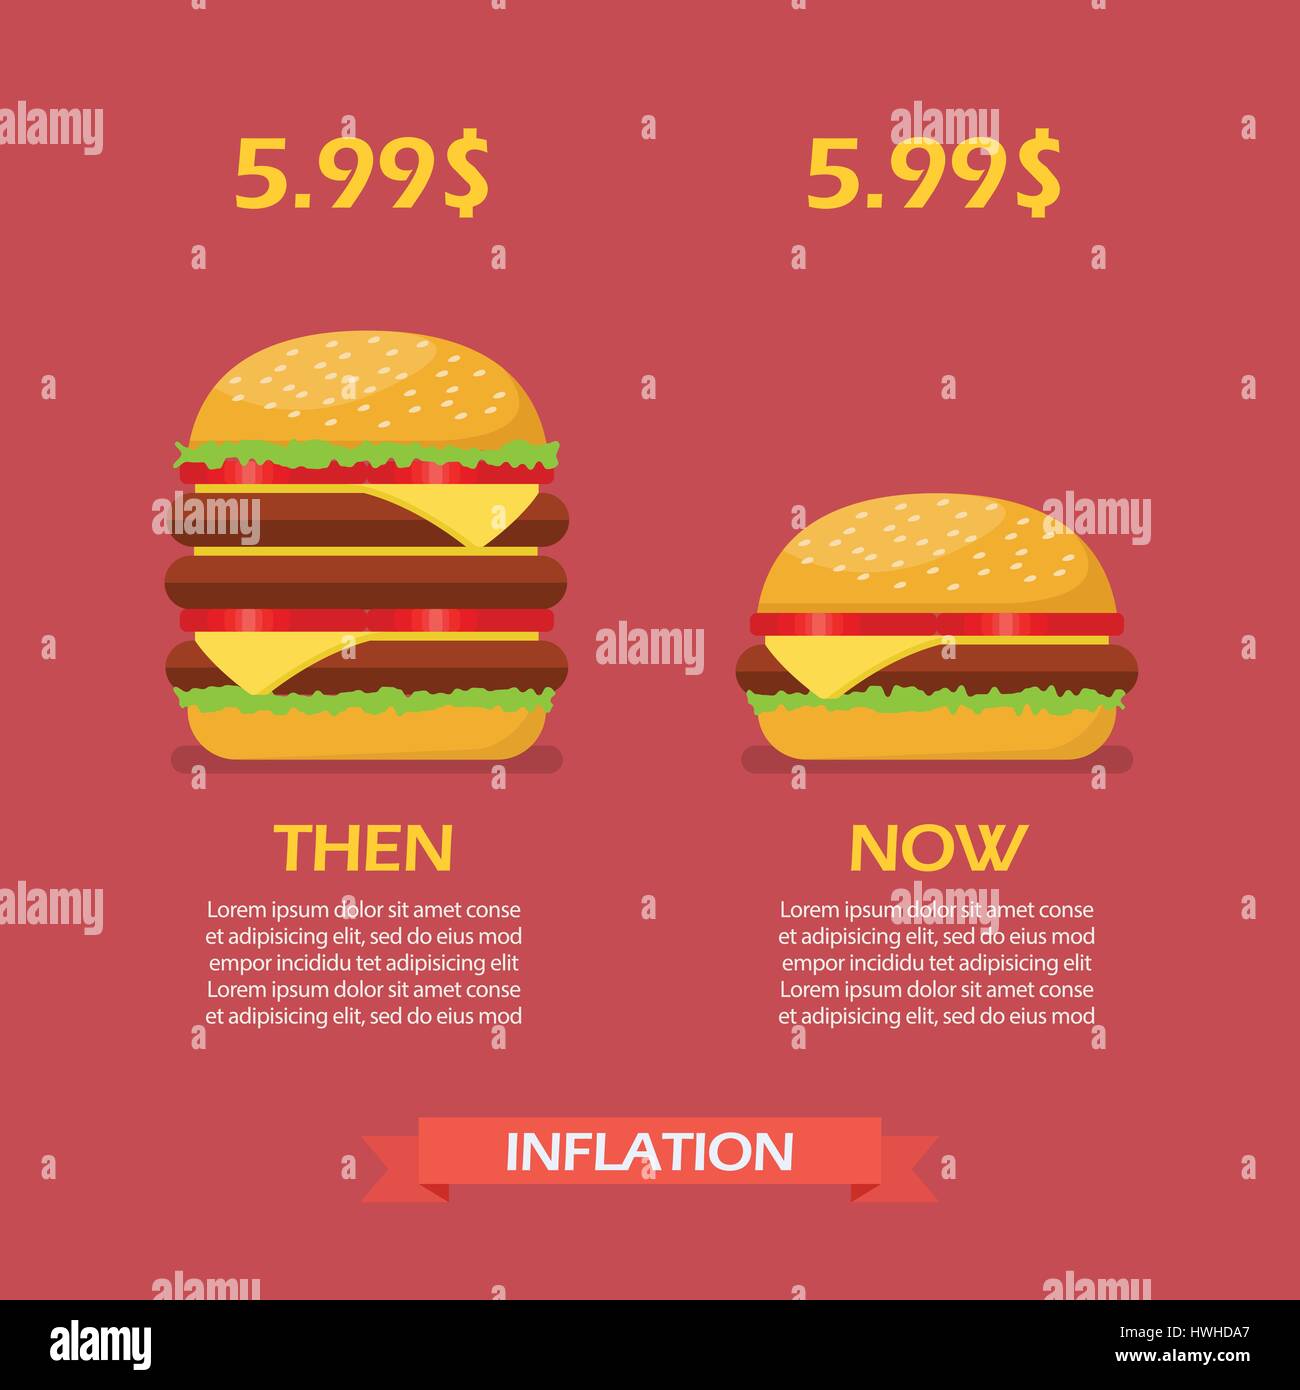 Inflation concept of hamburger. Vector illustration Stock Vector